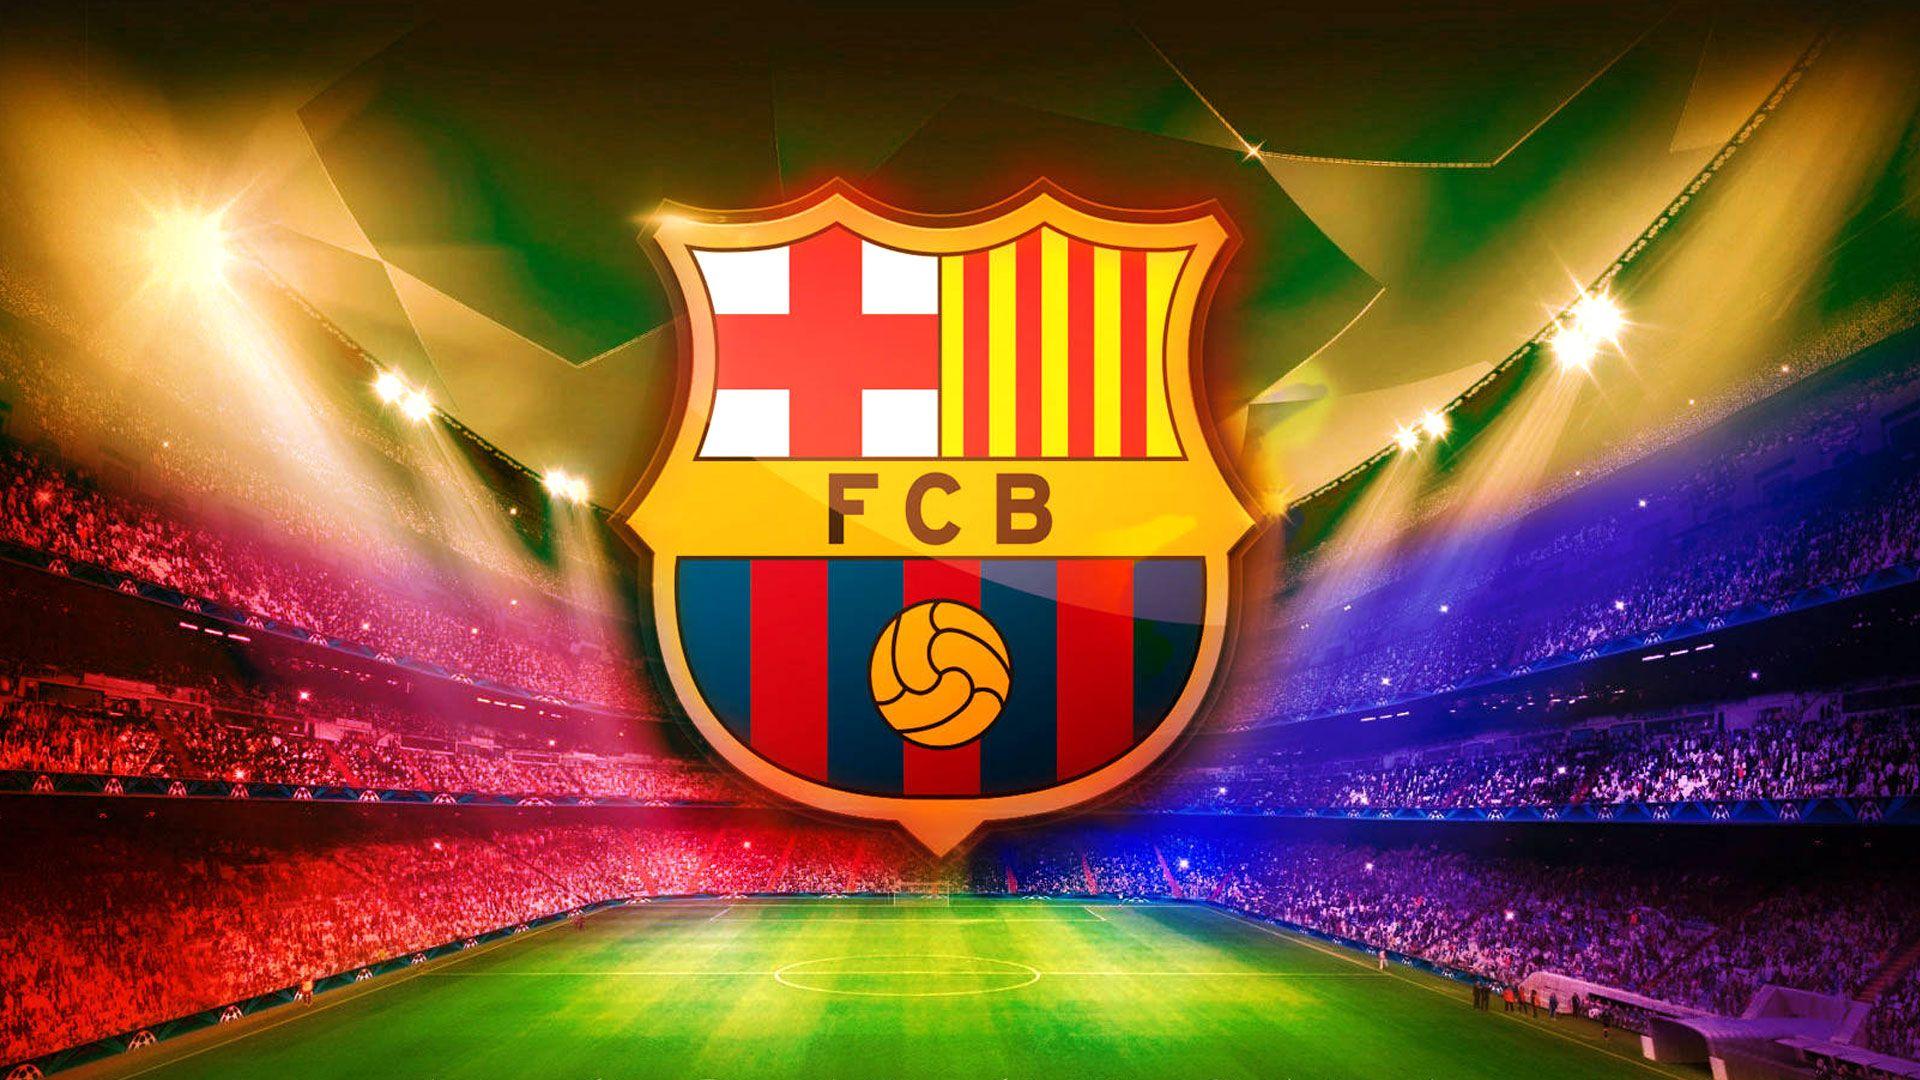 FC barcelona logo desktop wallpaper image. file